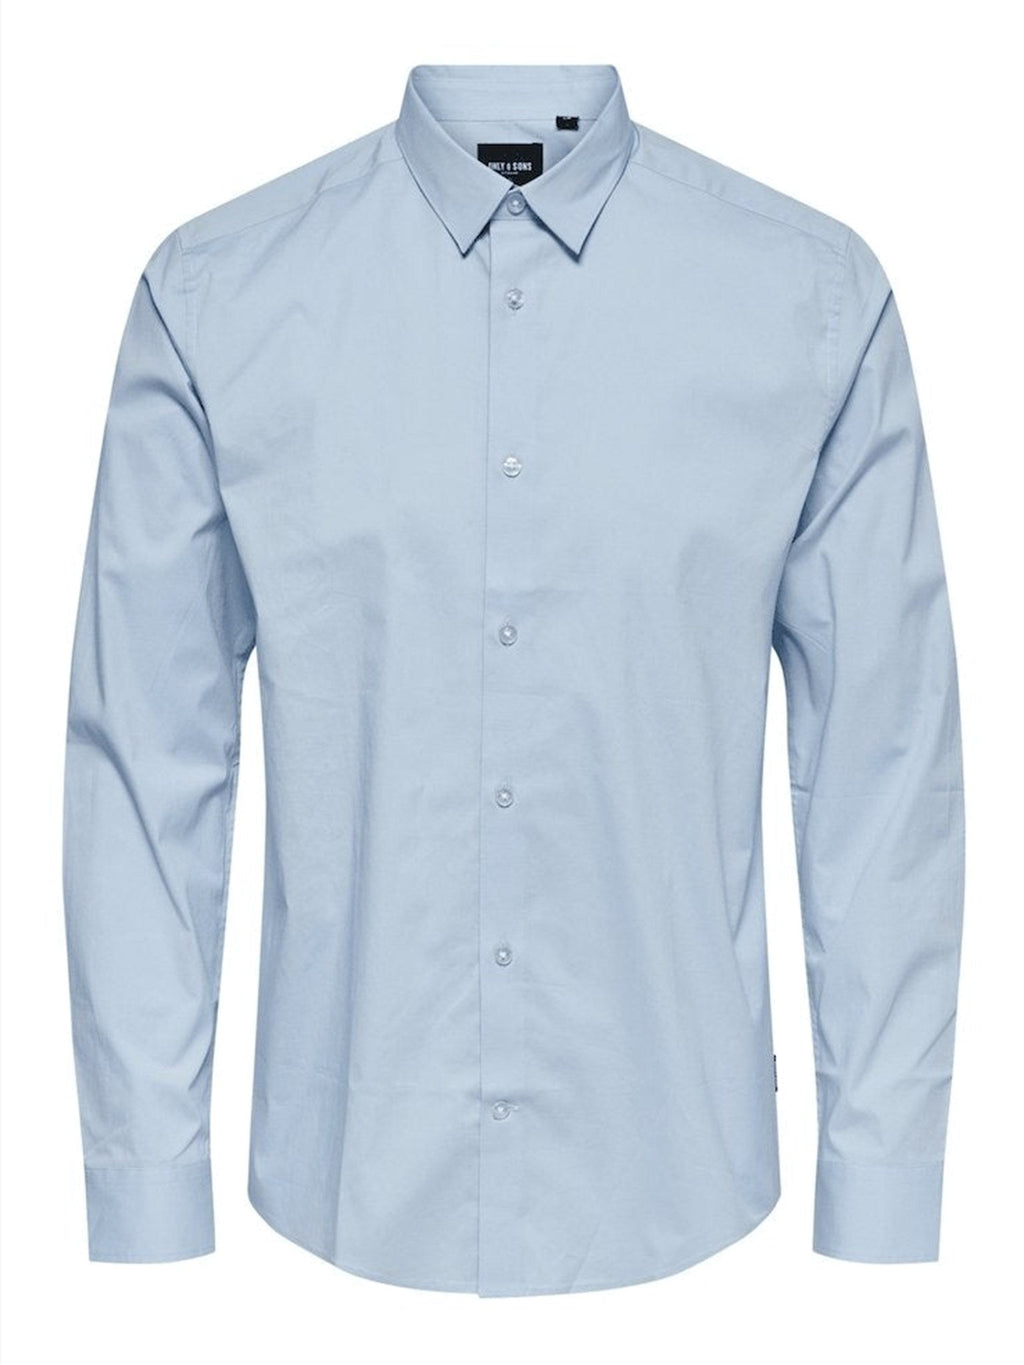 Bart Eco camisa - azul claro (algodón orgánico)